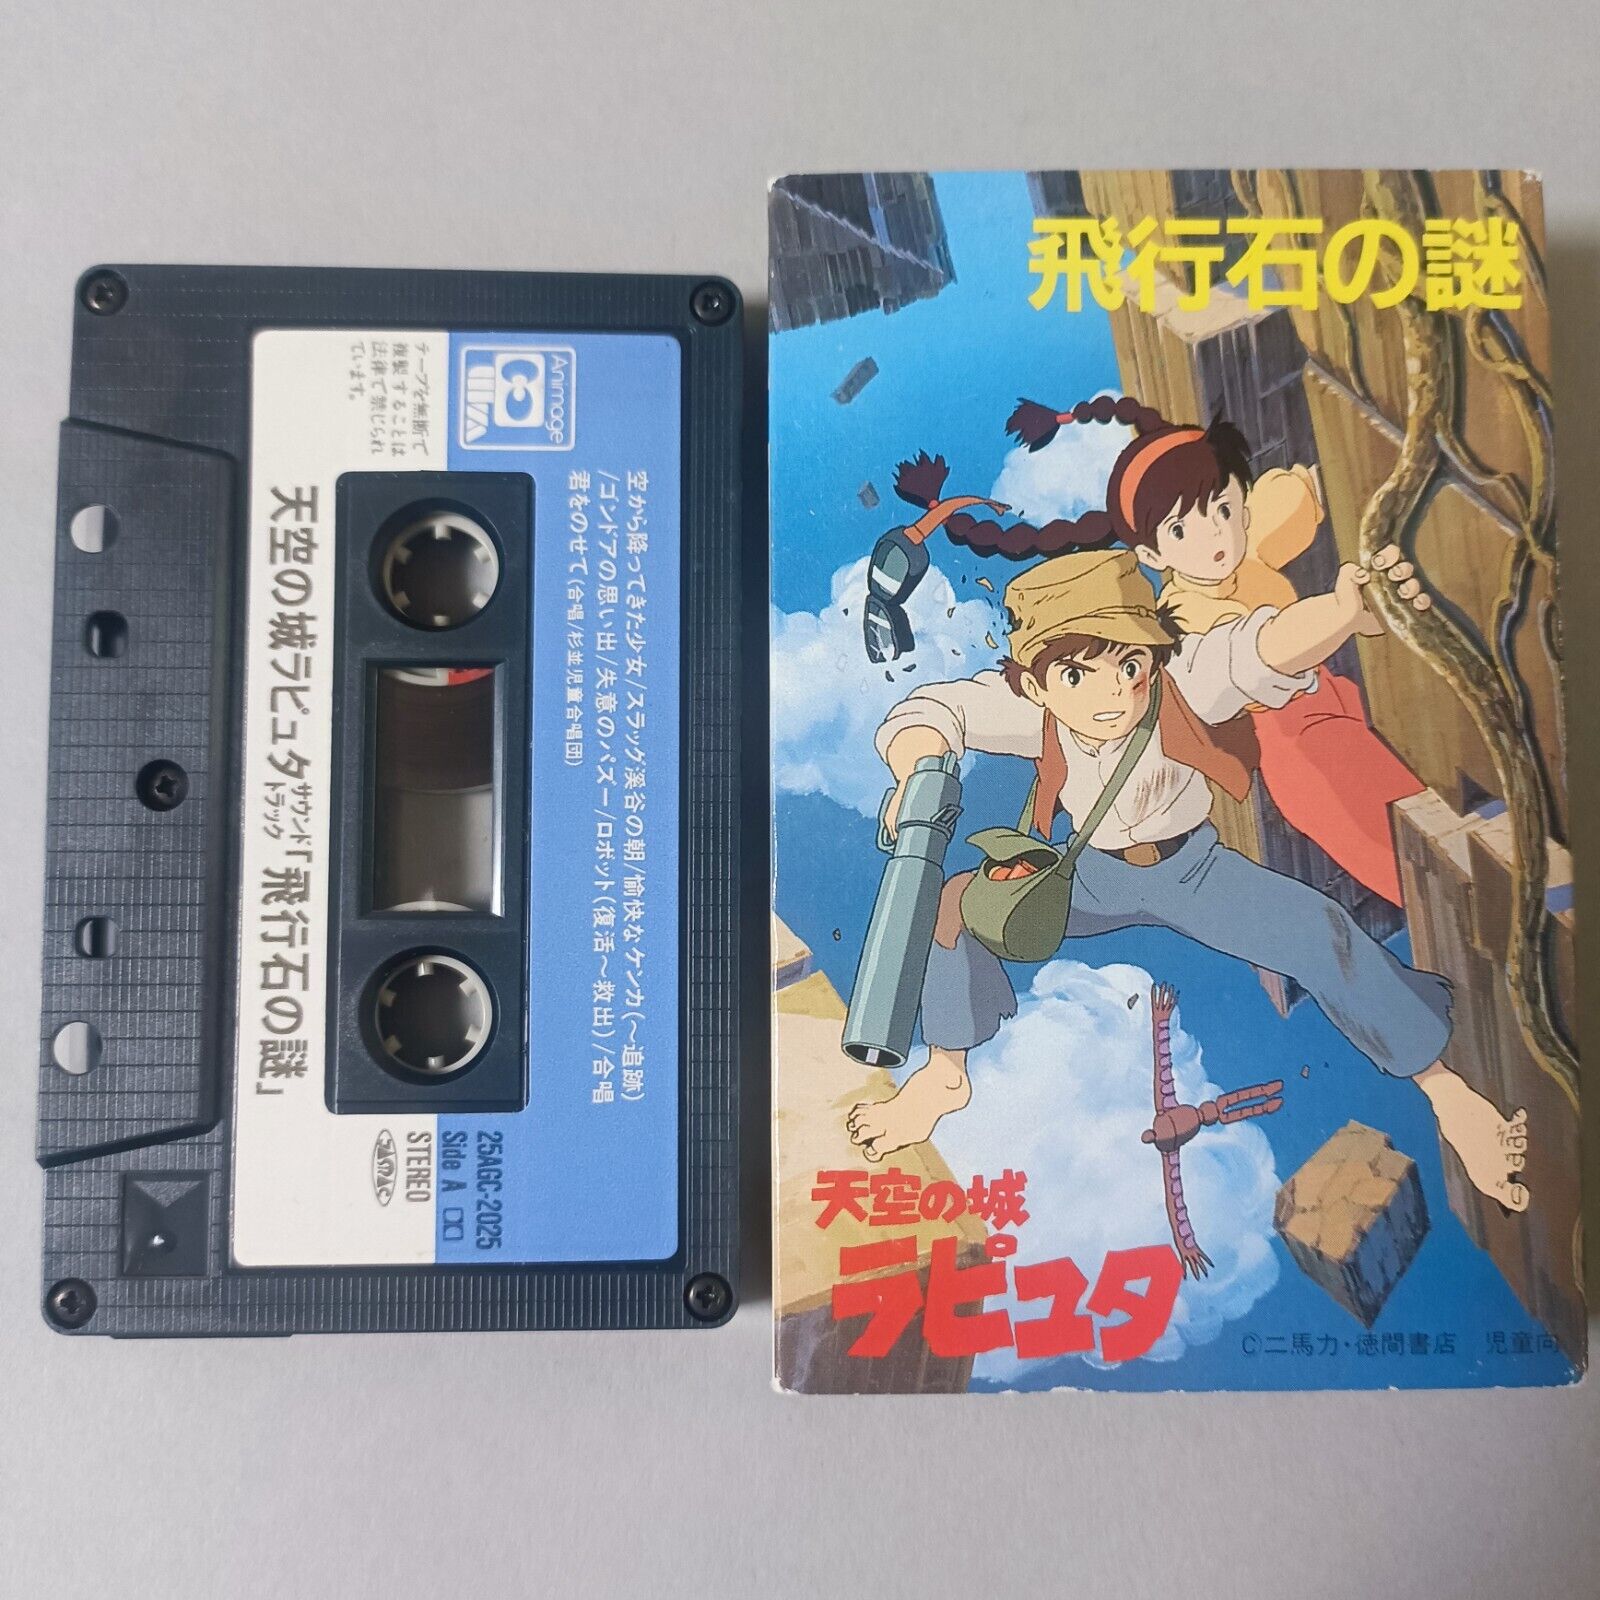 Castle In The Sky 1986 cassette tape soundtrack vintage studio Ghibli anime Ex